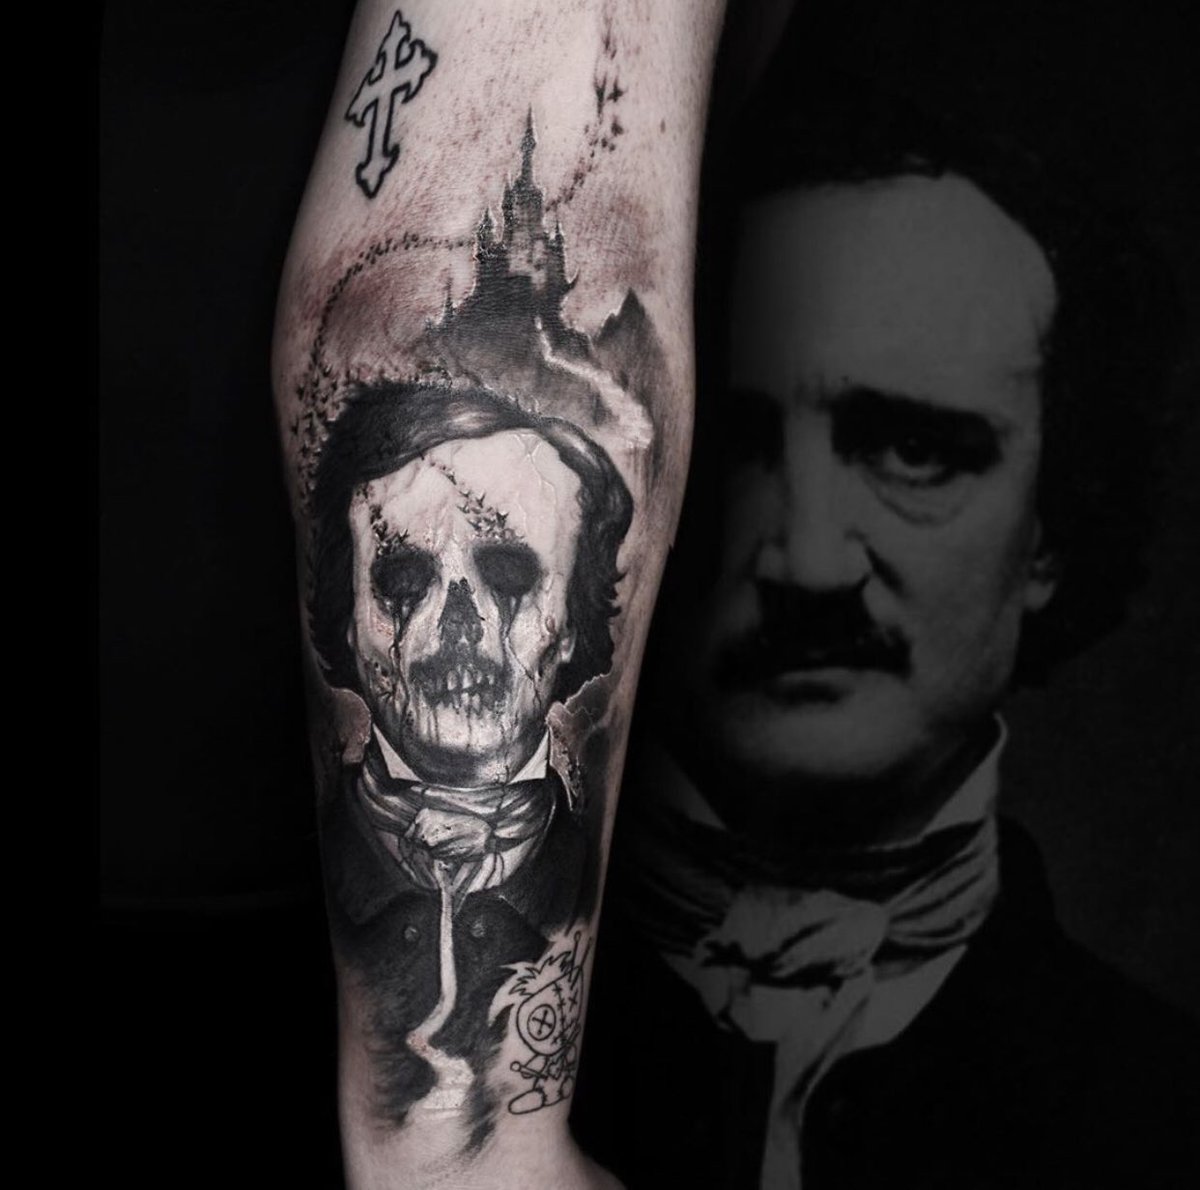 Edgar Allan Poe by Will XX at Blaque Salt Tattoo in Salt Lake City Utah   rtattoos